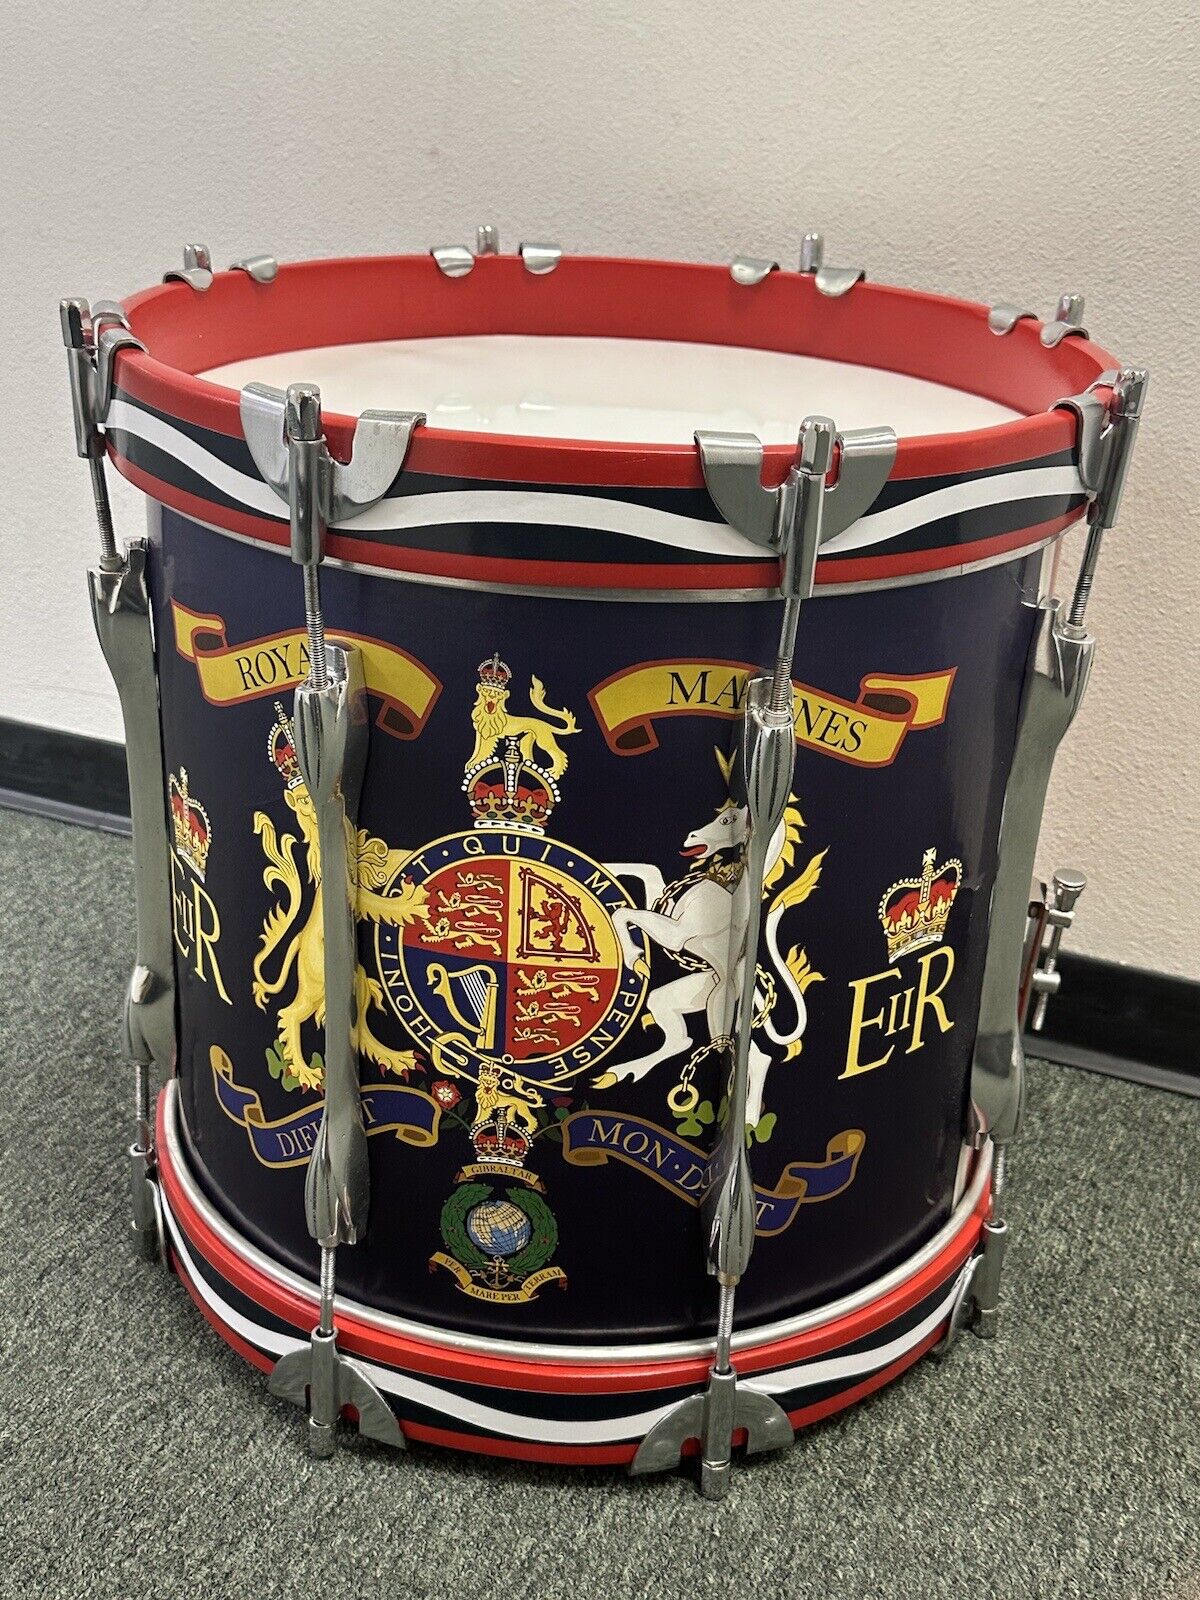 Replica British Royal Marines drum